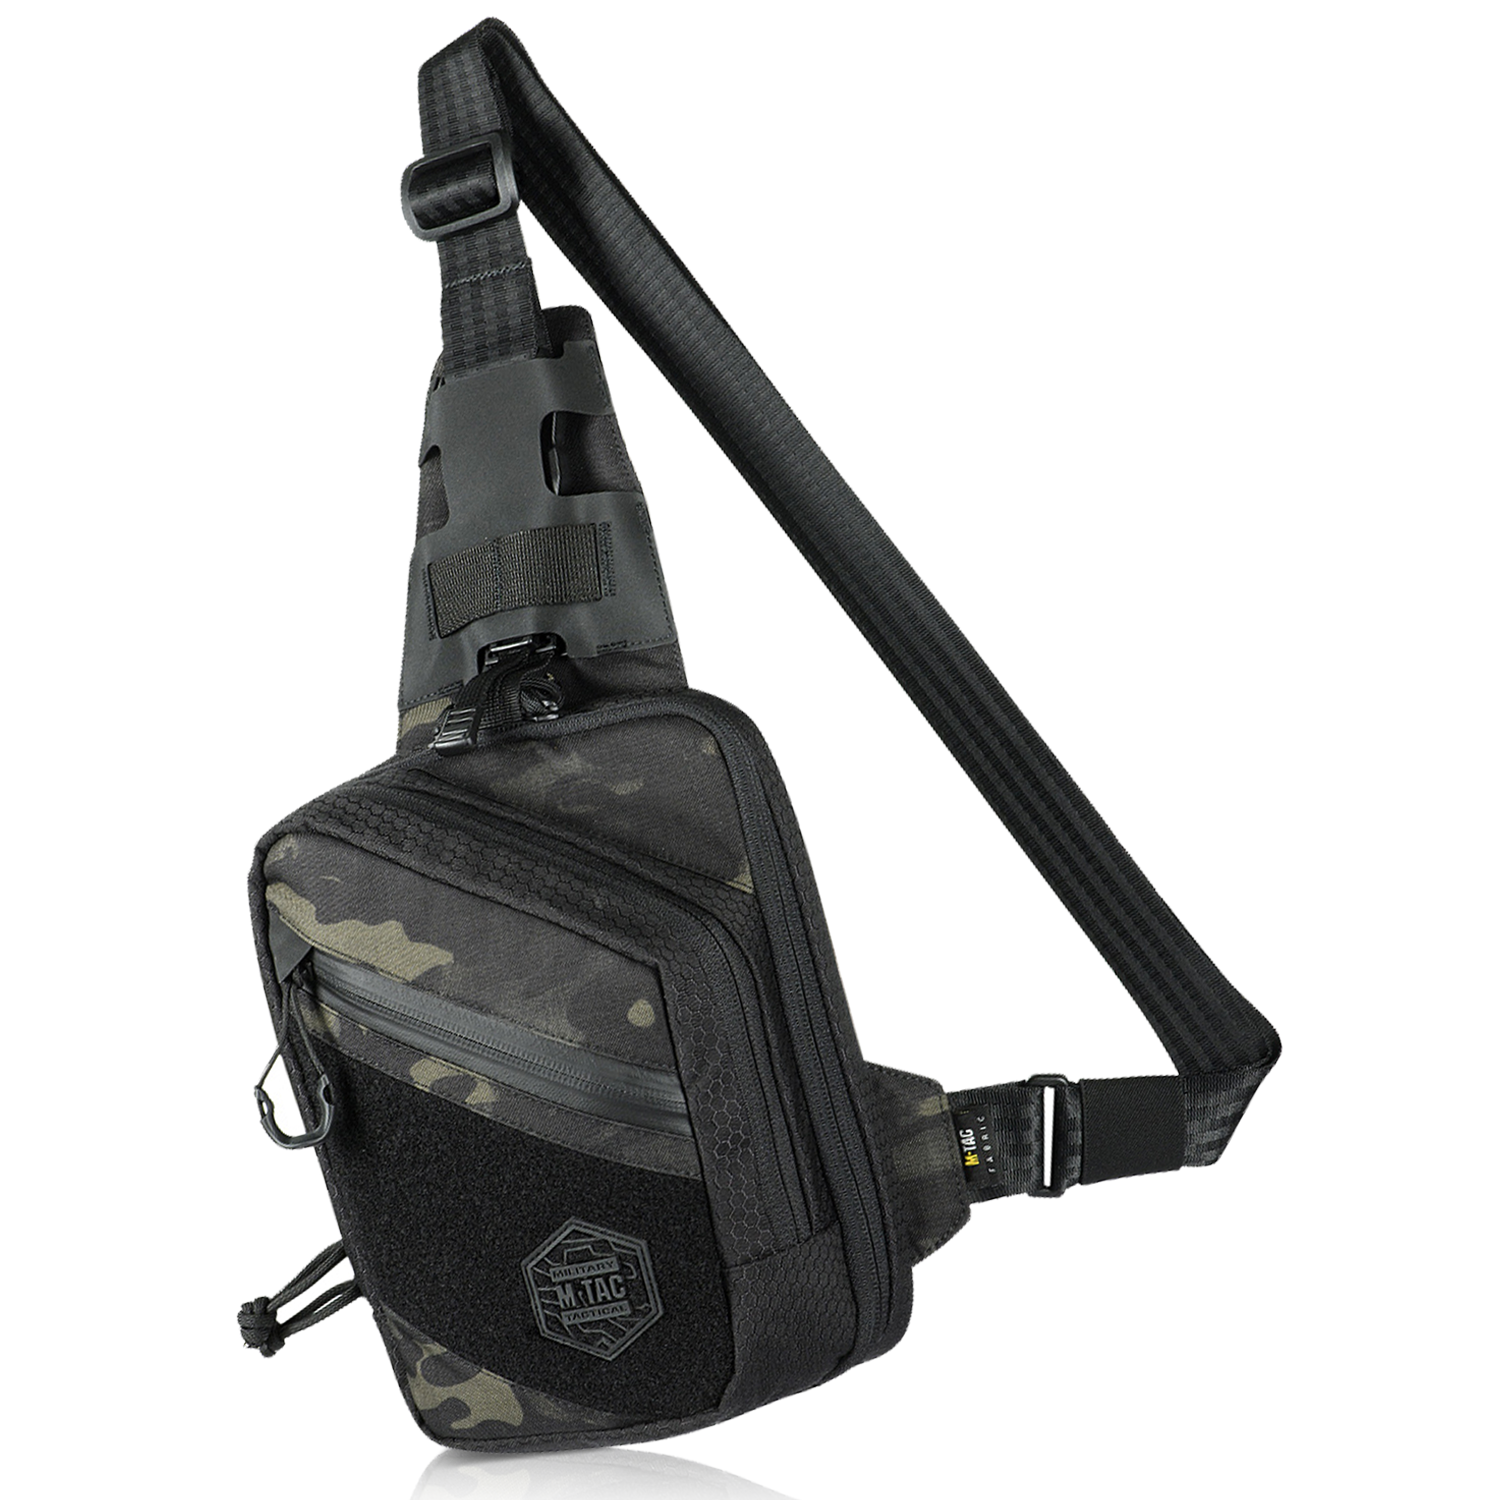 M-Tac Sling Pistol Bag with Loop Panel